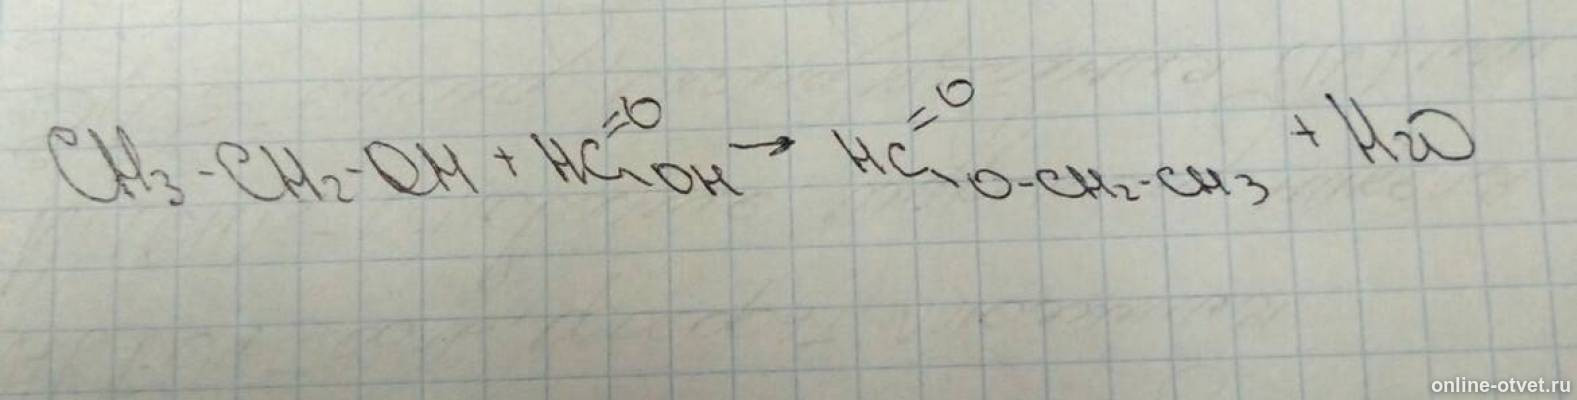 C2h5oh продукт реакции. HCOOH c2h5oh. С2н5он HCOOH. C2h5oh hcooc2h5. HCOOH c2h5oh реакция.